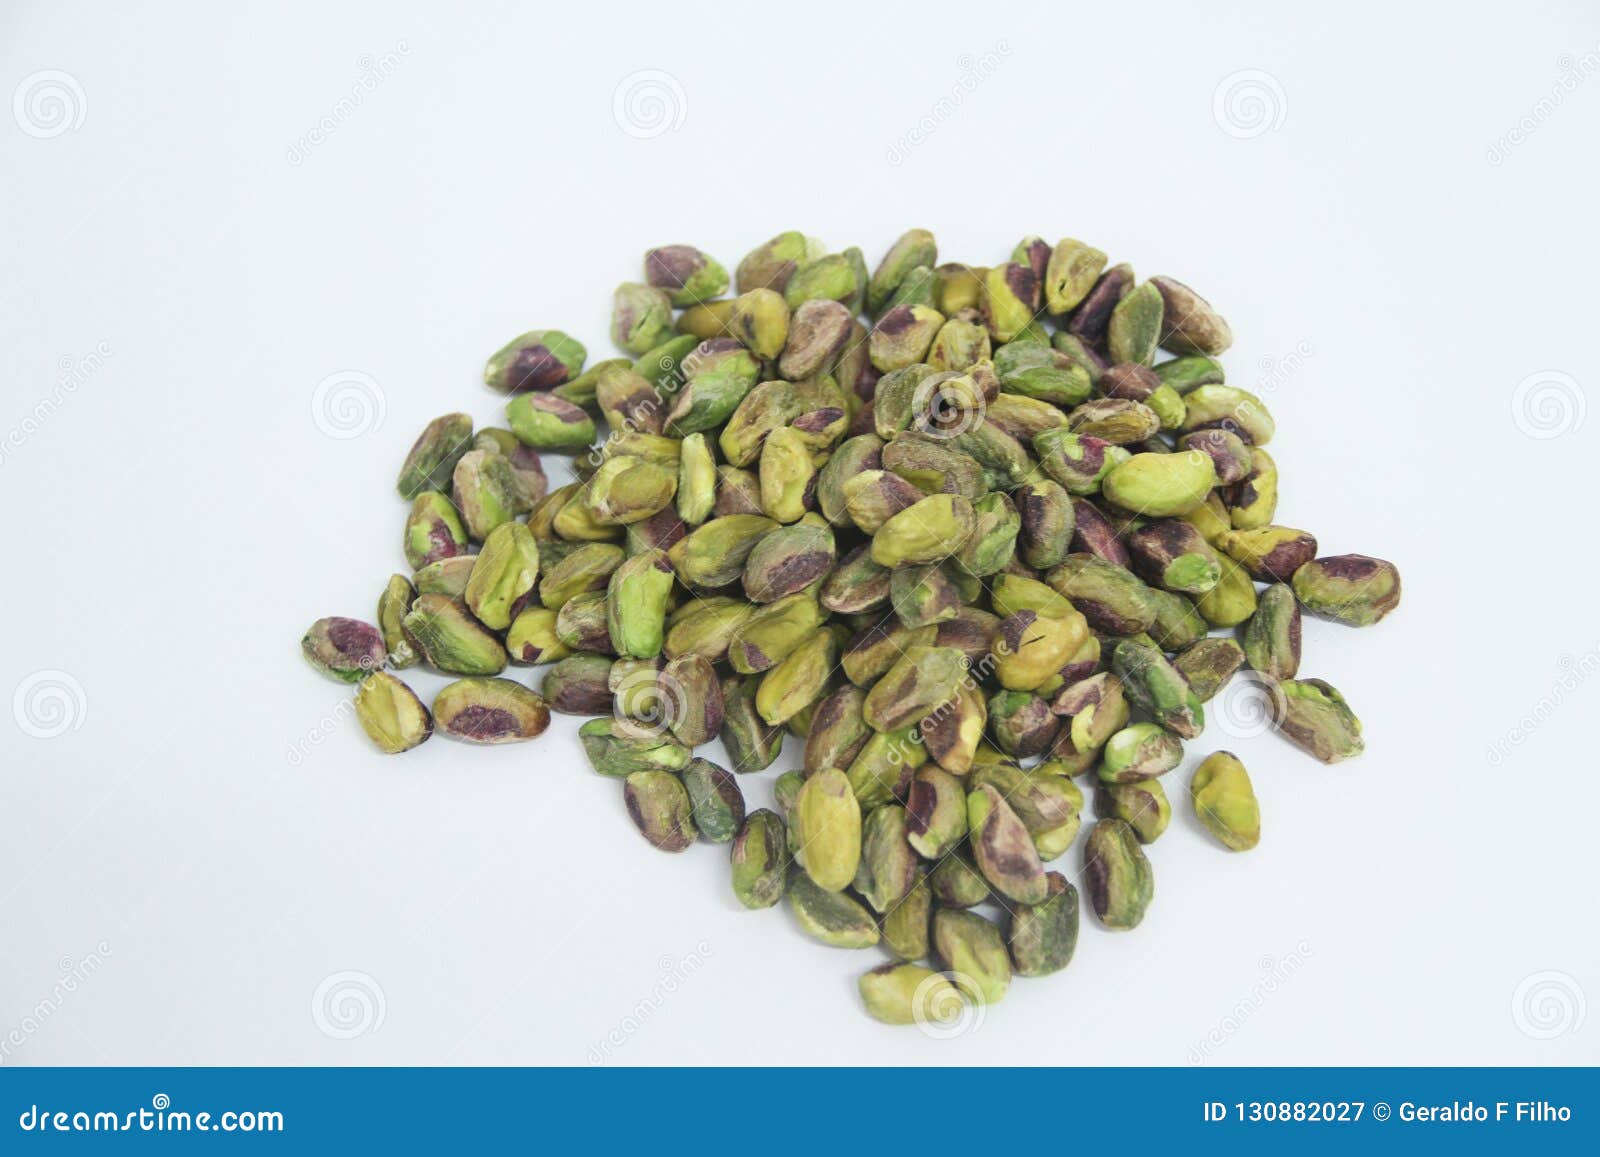 pistachios food grain agriculture green detail delicious sao paulo brazil